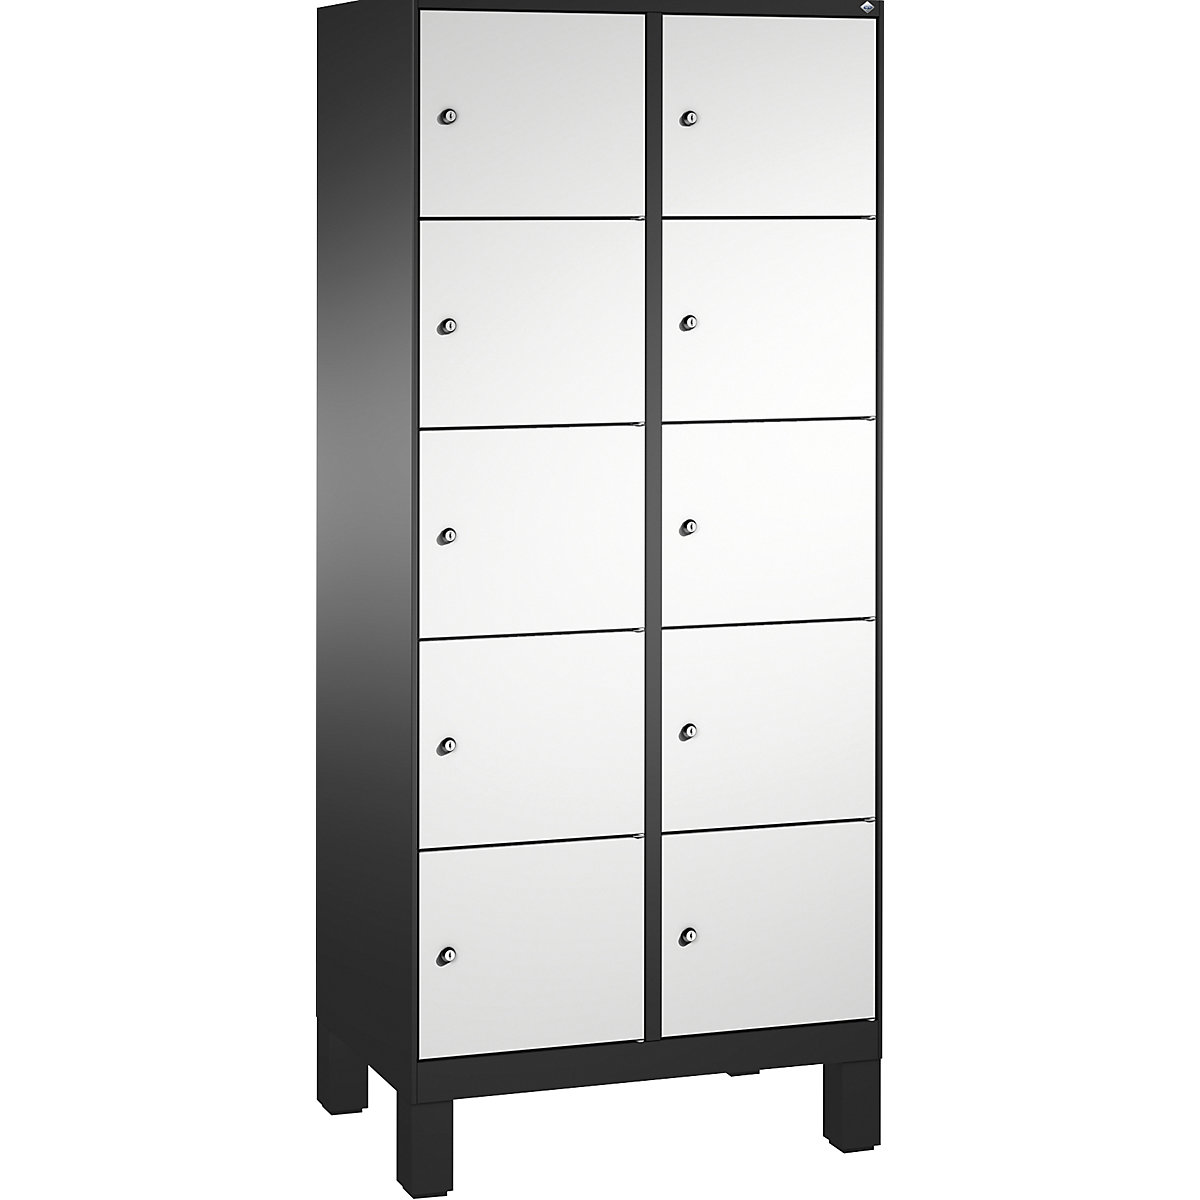 EVOLO locker unit, with feet – C+P, 2 compartments, 5 shelf compartments each, compartment width 400 mm, black grey / light grey-10